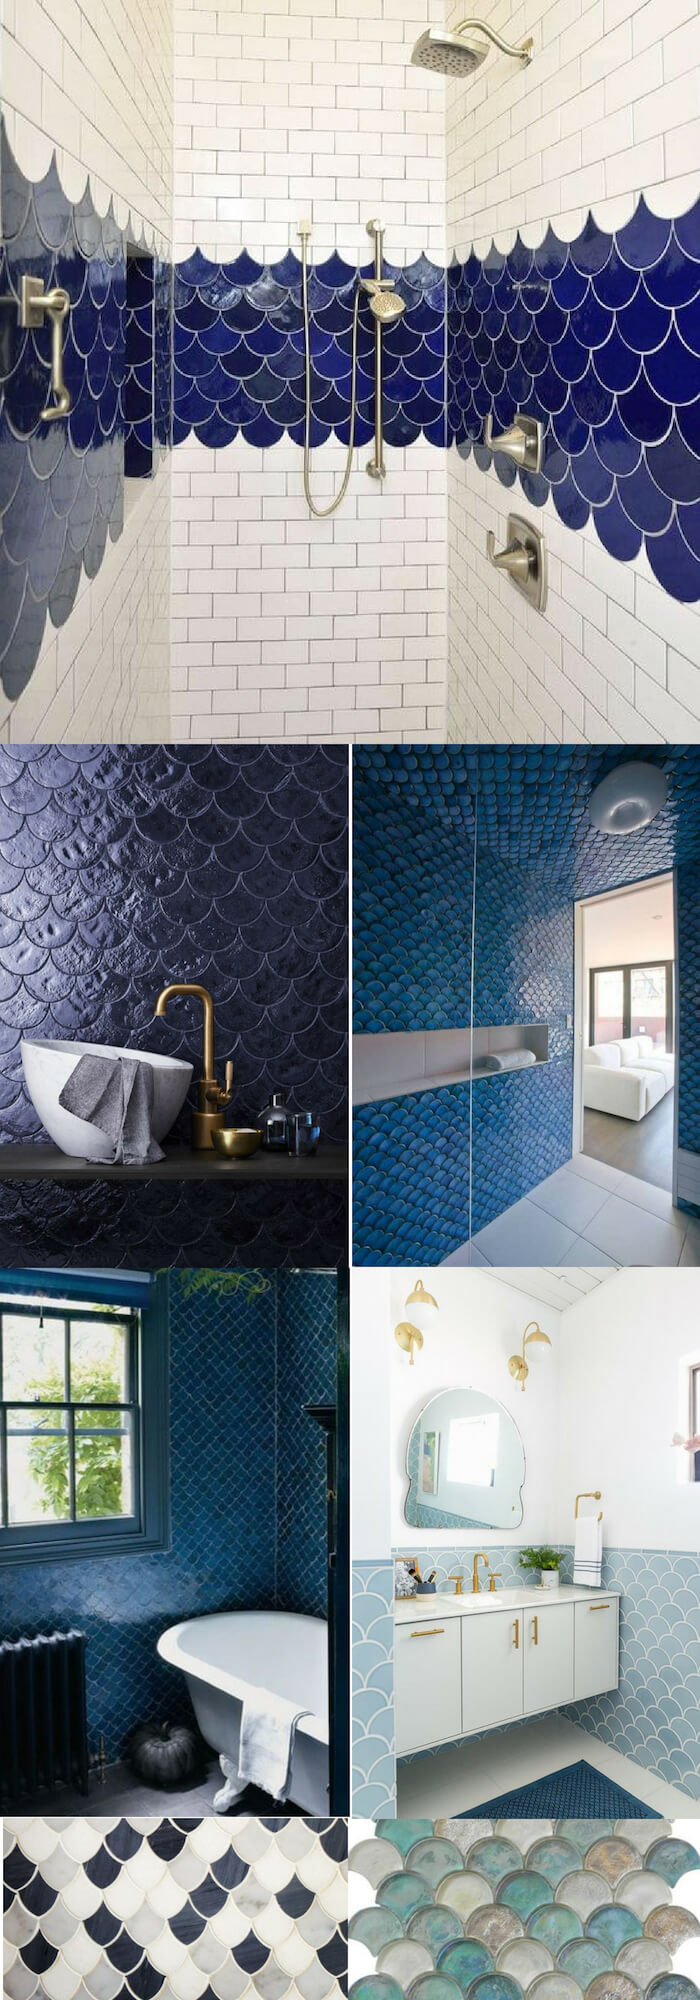 Moroccan fish scales wall | Unique Wall Tile Ideas for Bathroom Design